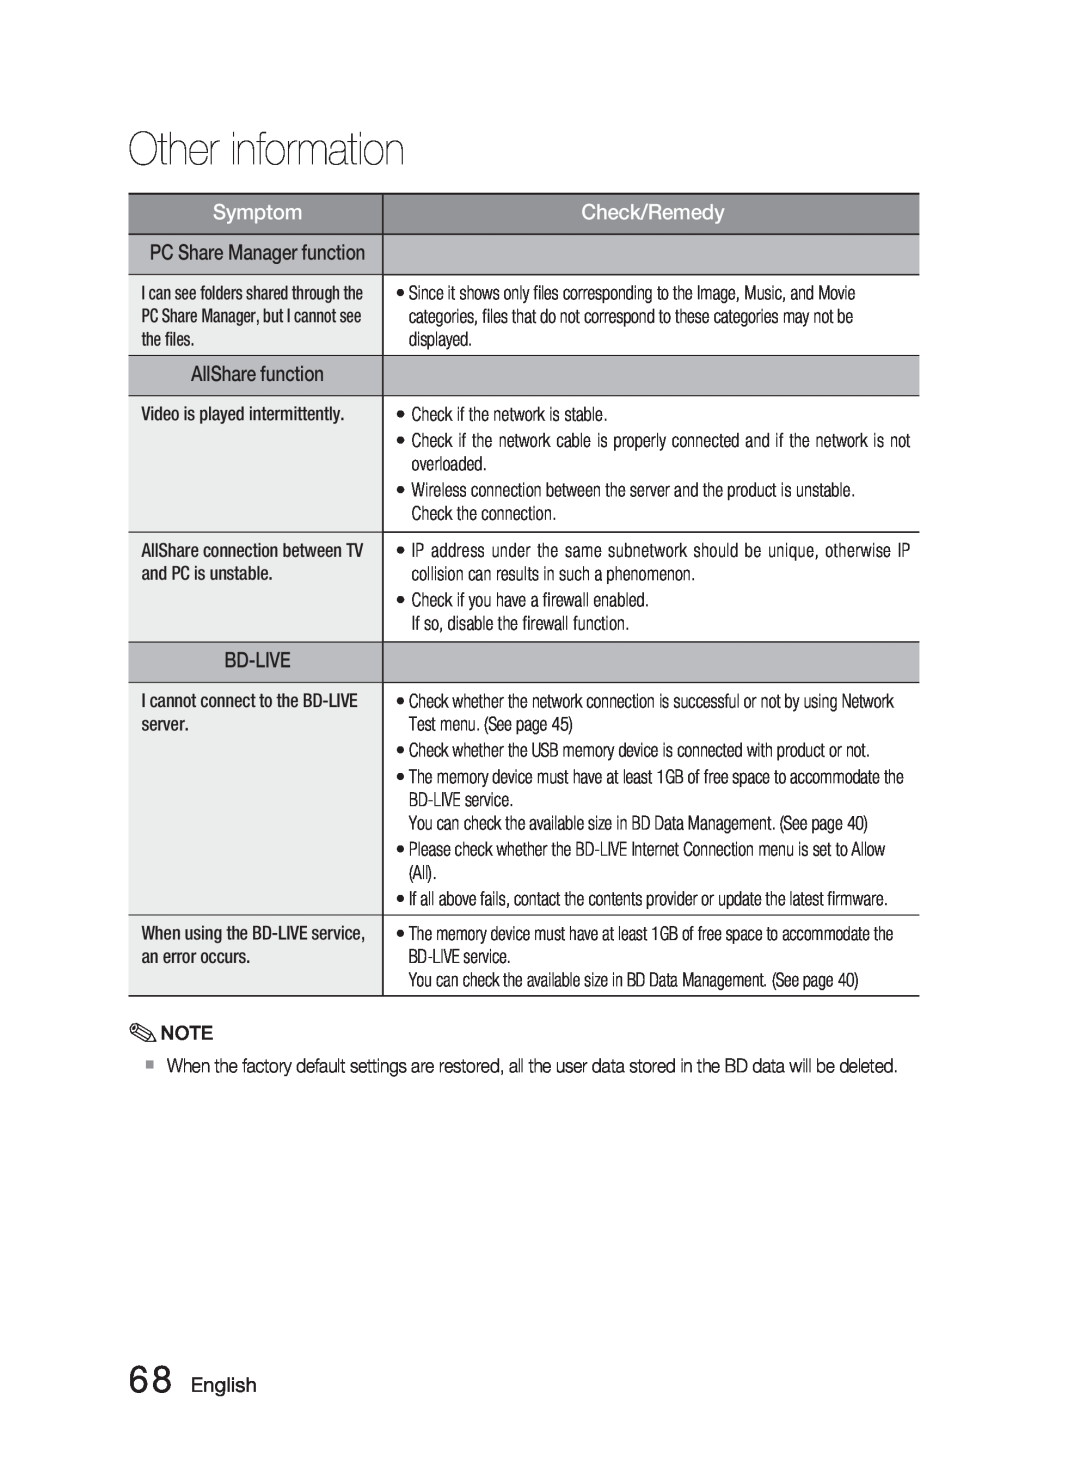 Samsung AH68-02279Y user manual English, Other information, Symptom, Check/Remedy 